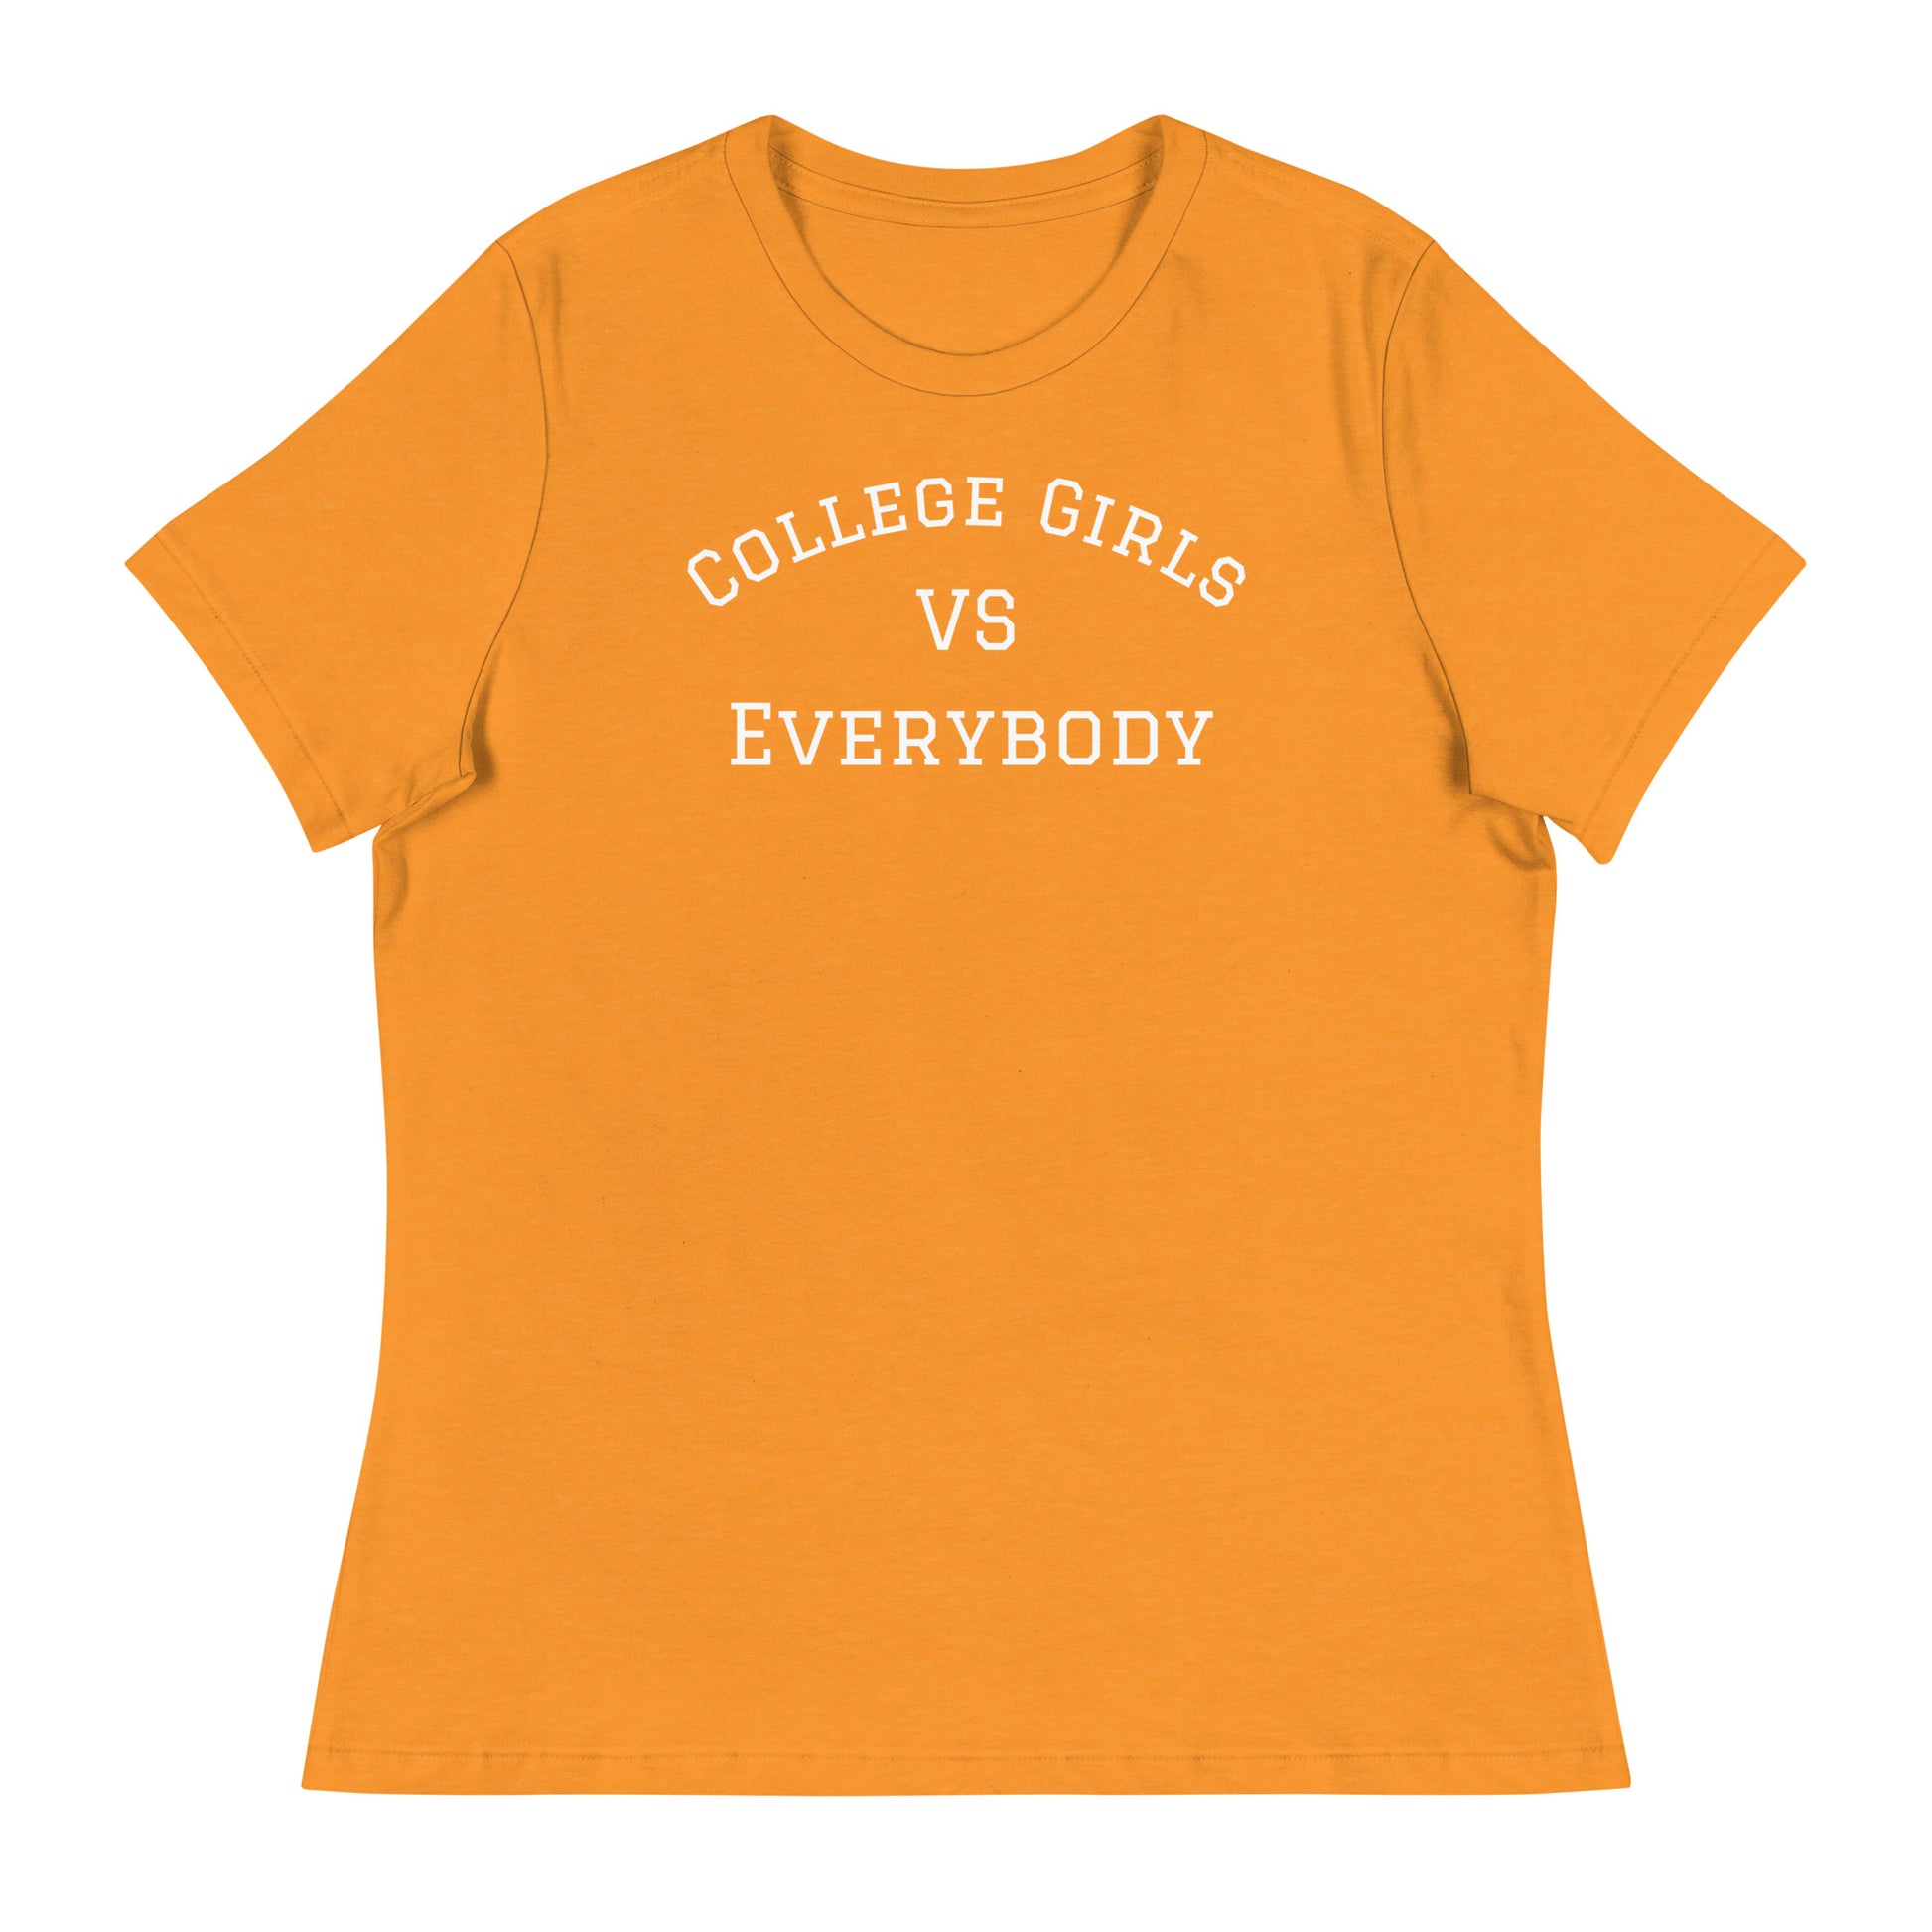 Best women's short sleeve college-casual orange marmalade tee shirt that celebrates college girls